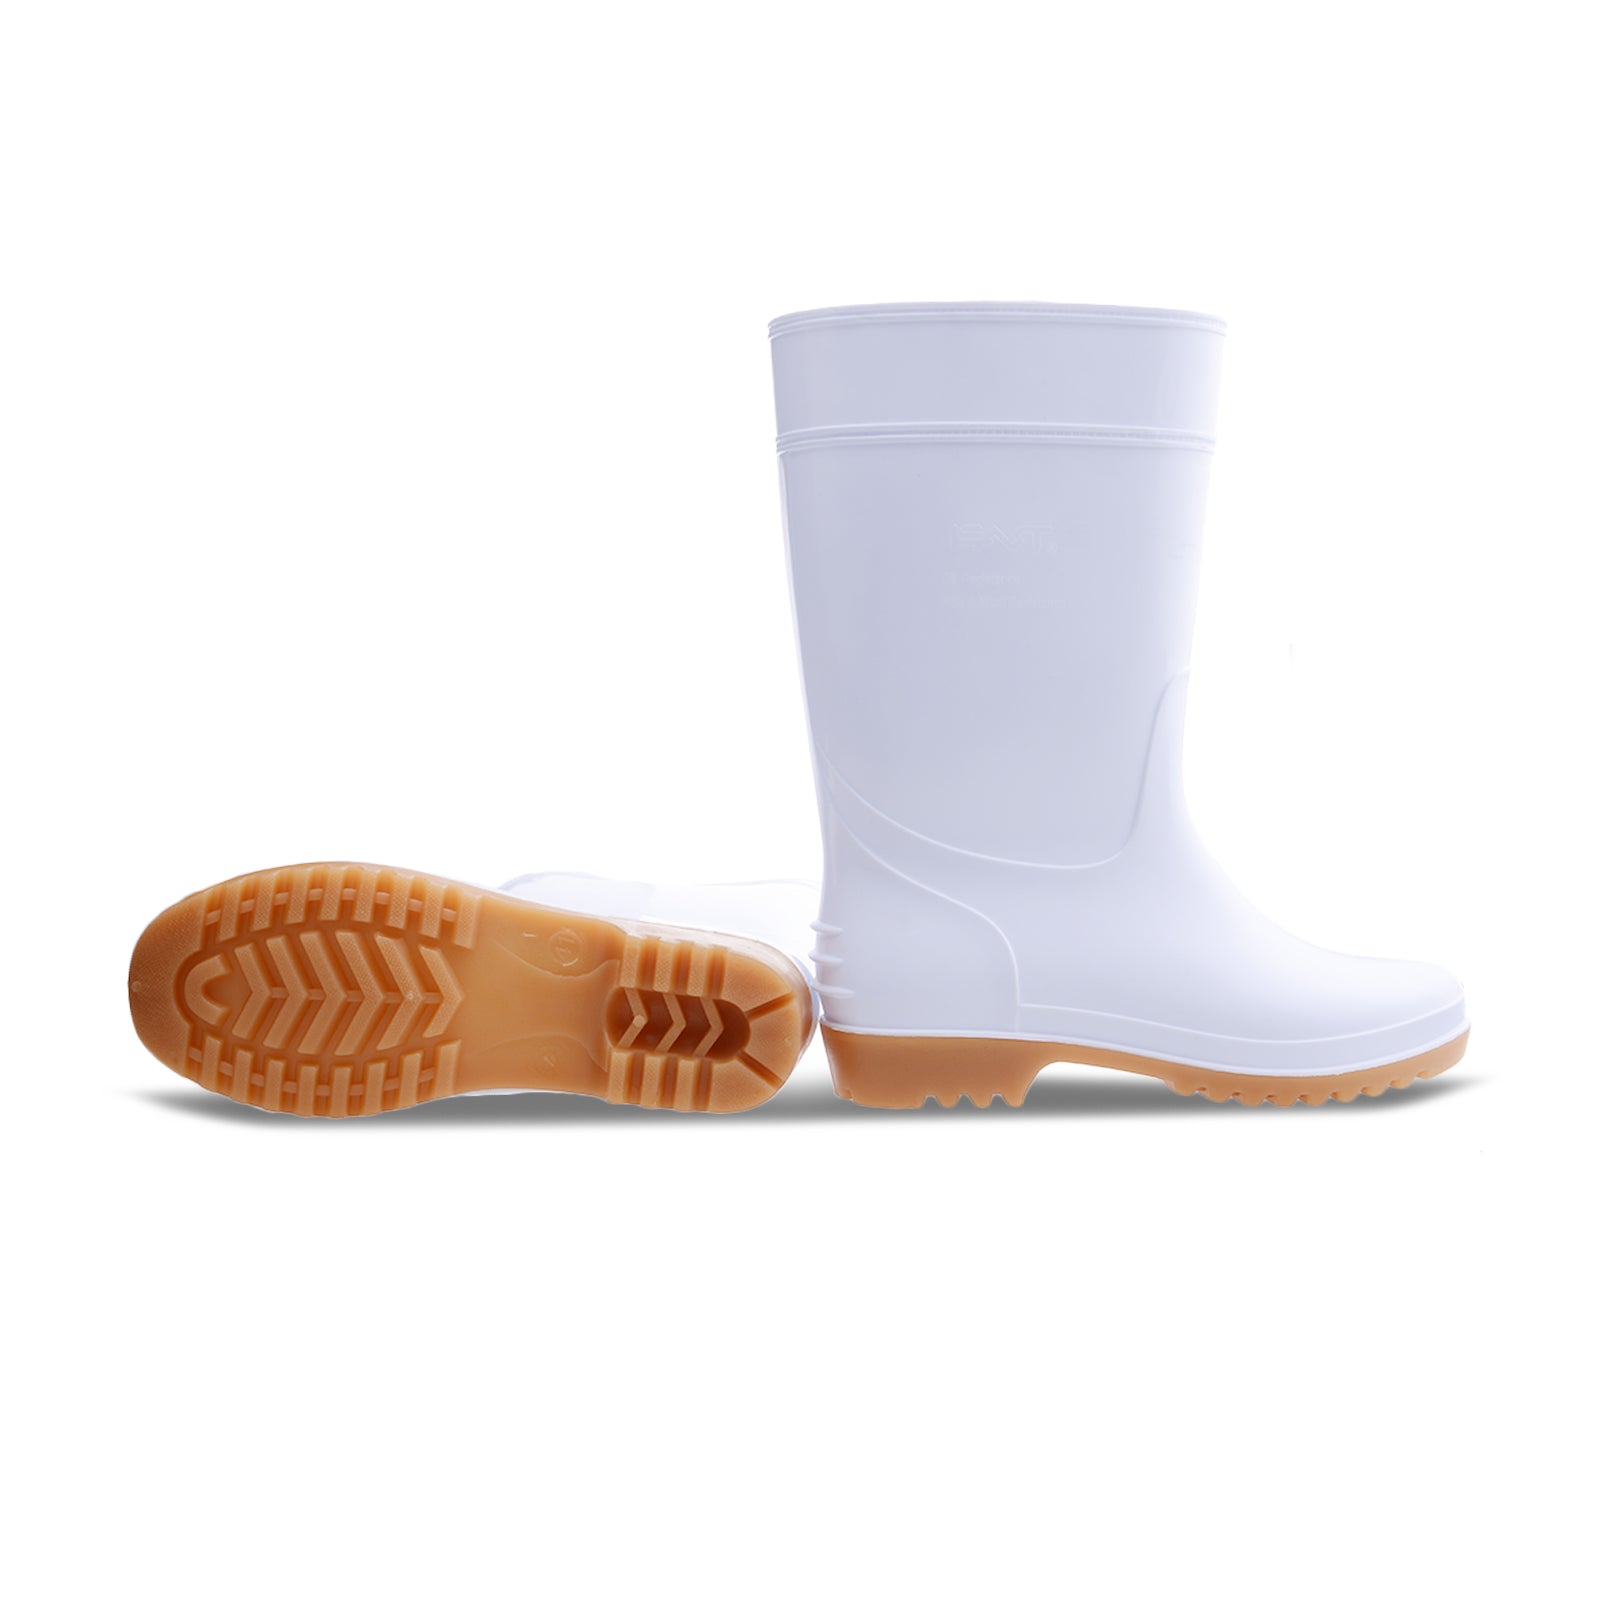 LT301-M Long Labor Rain Boots (Hong Kong Safety Mark)-FAST-WH-EU Size: 36-偉豐鞋 WELL SHOE HK-Well Shoe-偉豐鞋-偉豐網-荃灣鞋店-Functional shoes-Hong Kong Tsuen Wan Shoe Store-Tai Wan Shoe-Japan Shoe-高品質功能鞋-台灣進口鞋-日本進口鞋-High-quality shoes-鞋類配件-荃灣進口鞋-香港鞋店-優質鞋類產品-水靴-帆布鞋-廚師鞋-香港鞋品牌-Hong Kong Shoes brand-長者鞋-Hong Kong Rain Boots-Kitchen shoes-Cruthes-Slipper-Well Shoe Hong Kong-Anello-Arriba-休閒鞋-舒適鞋-健康鞋-皮鞋-Healthy shoes-Leather shoes-Hiking shoes